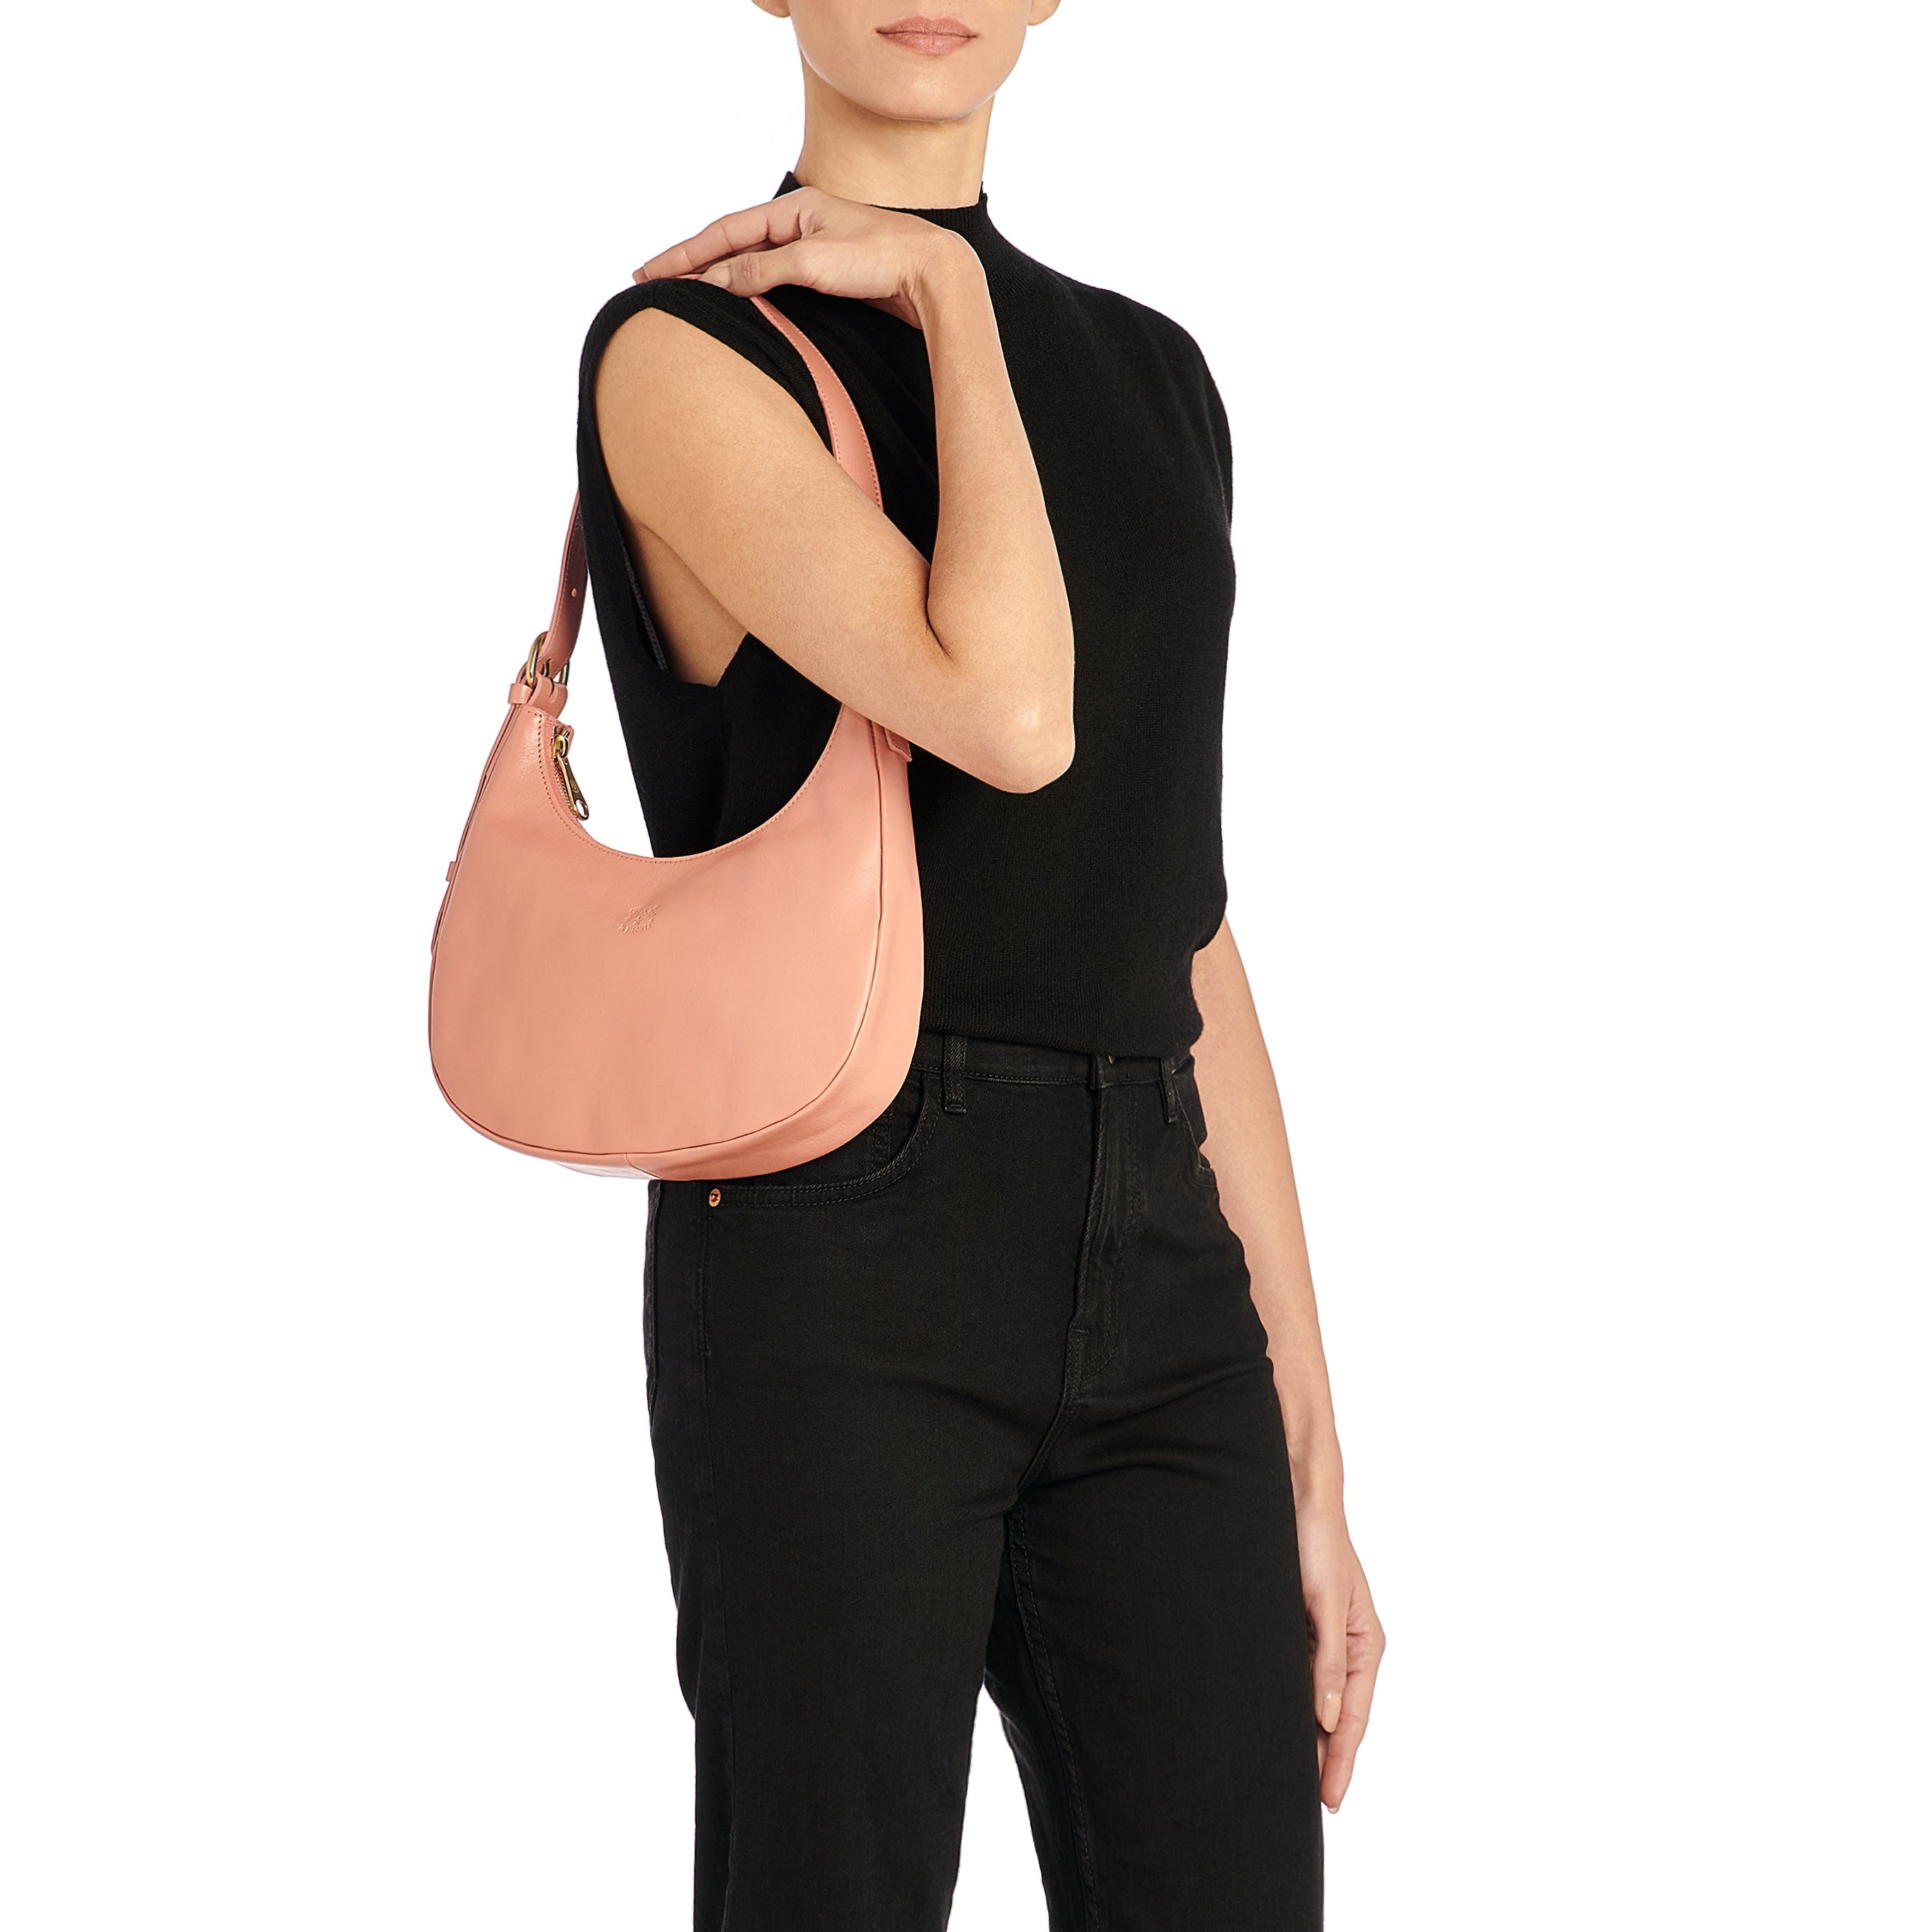 Belcanto | Women's shoulder bag in leather